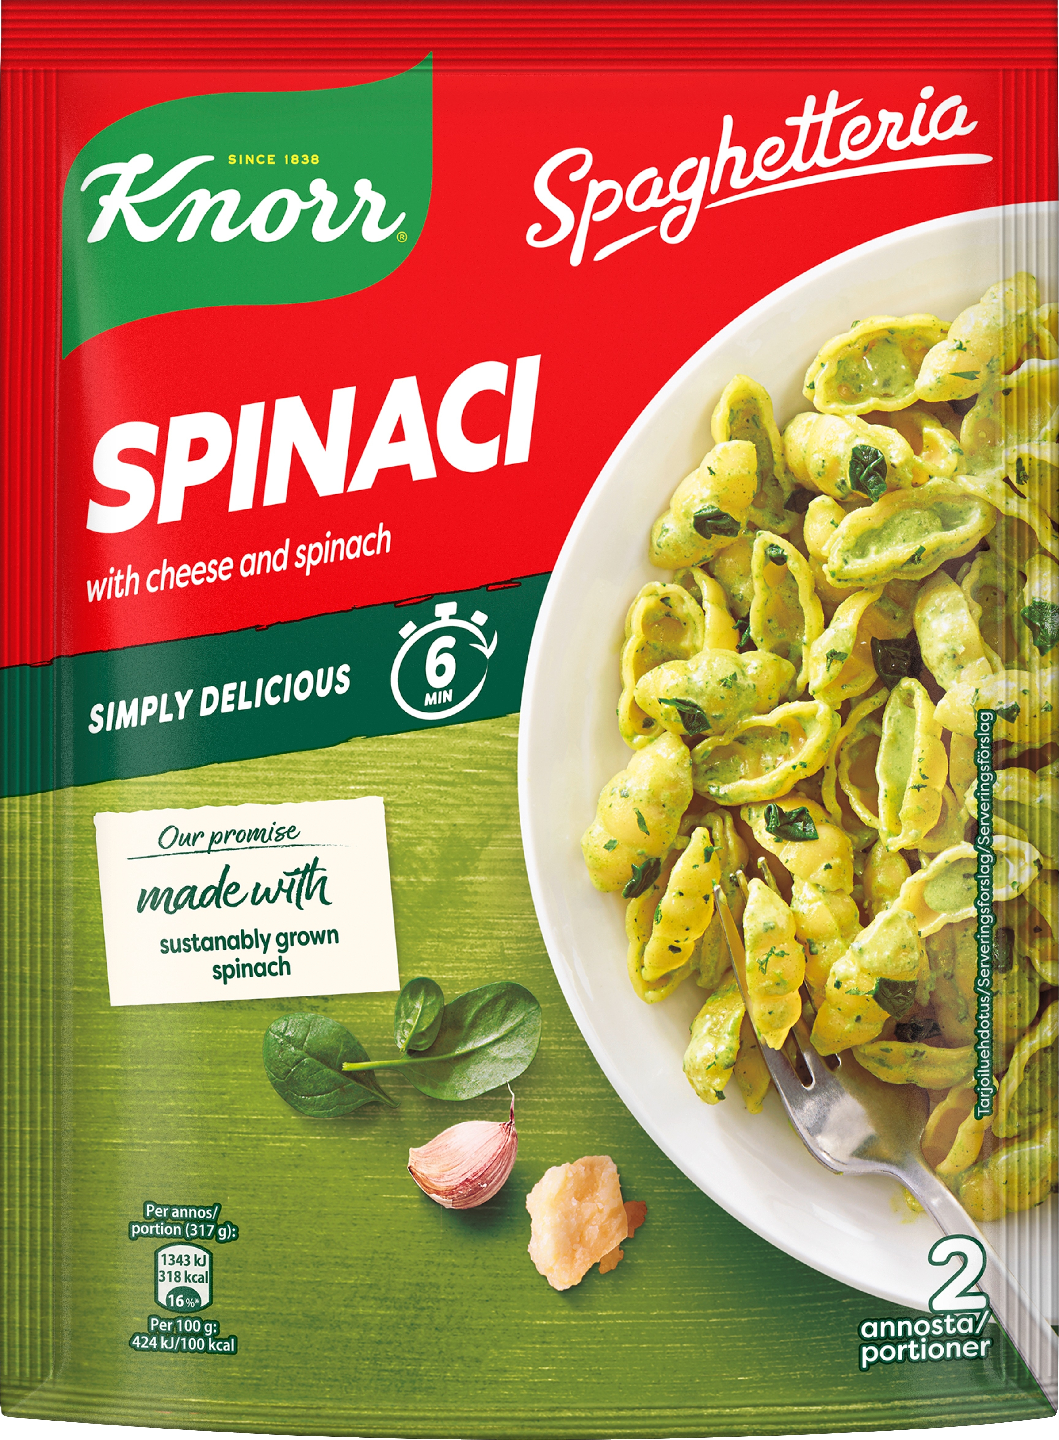 Knorr Spaghetteria 160g Spinaci